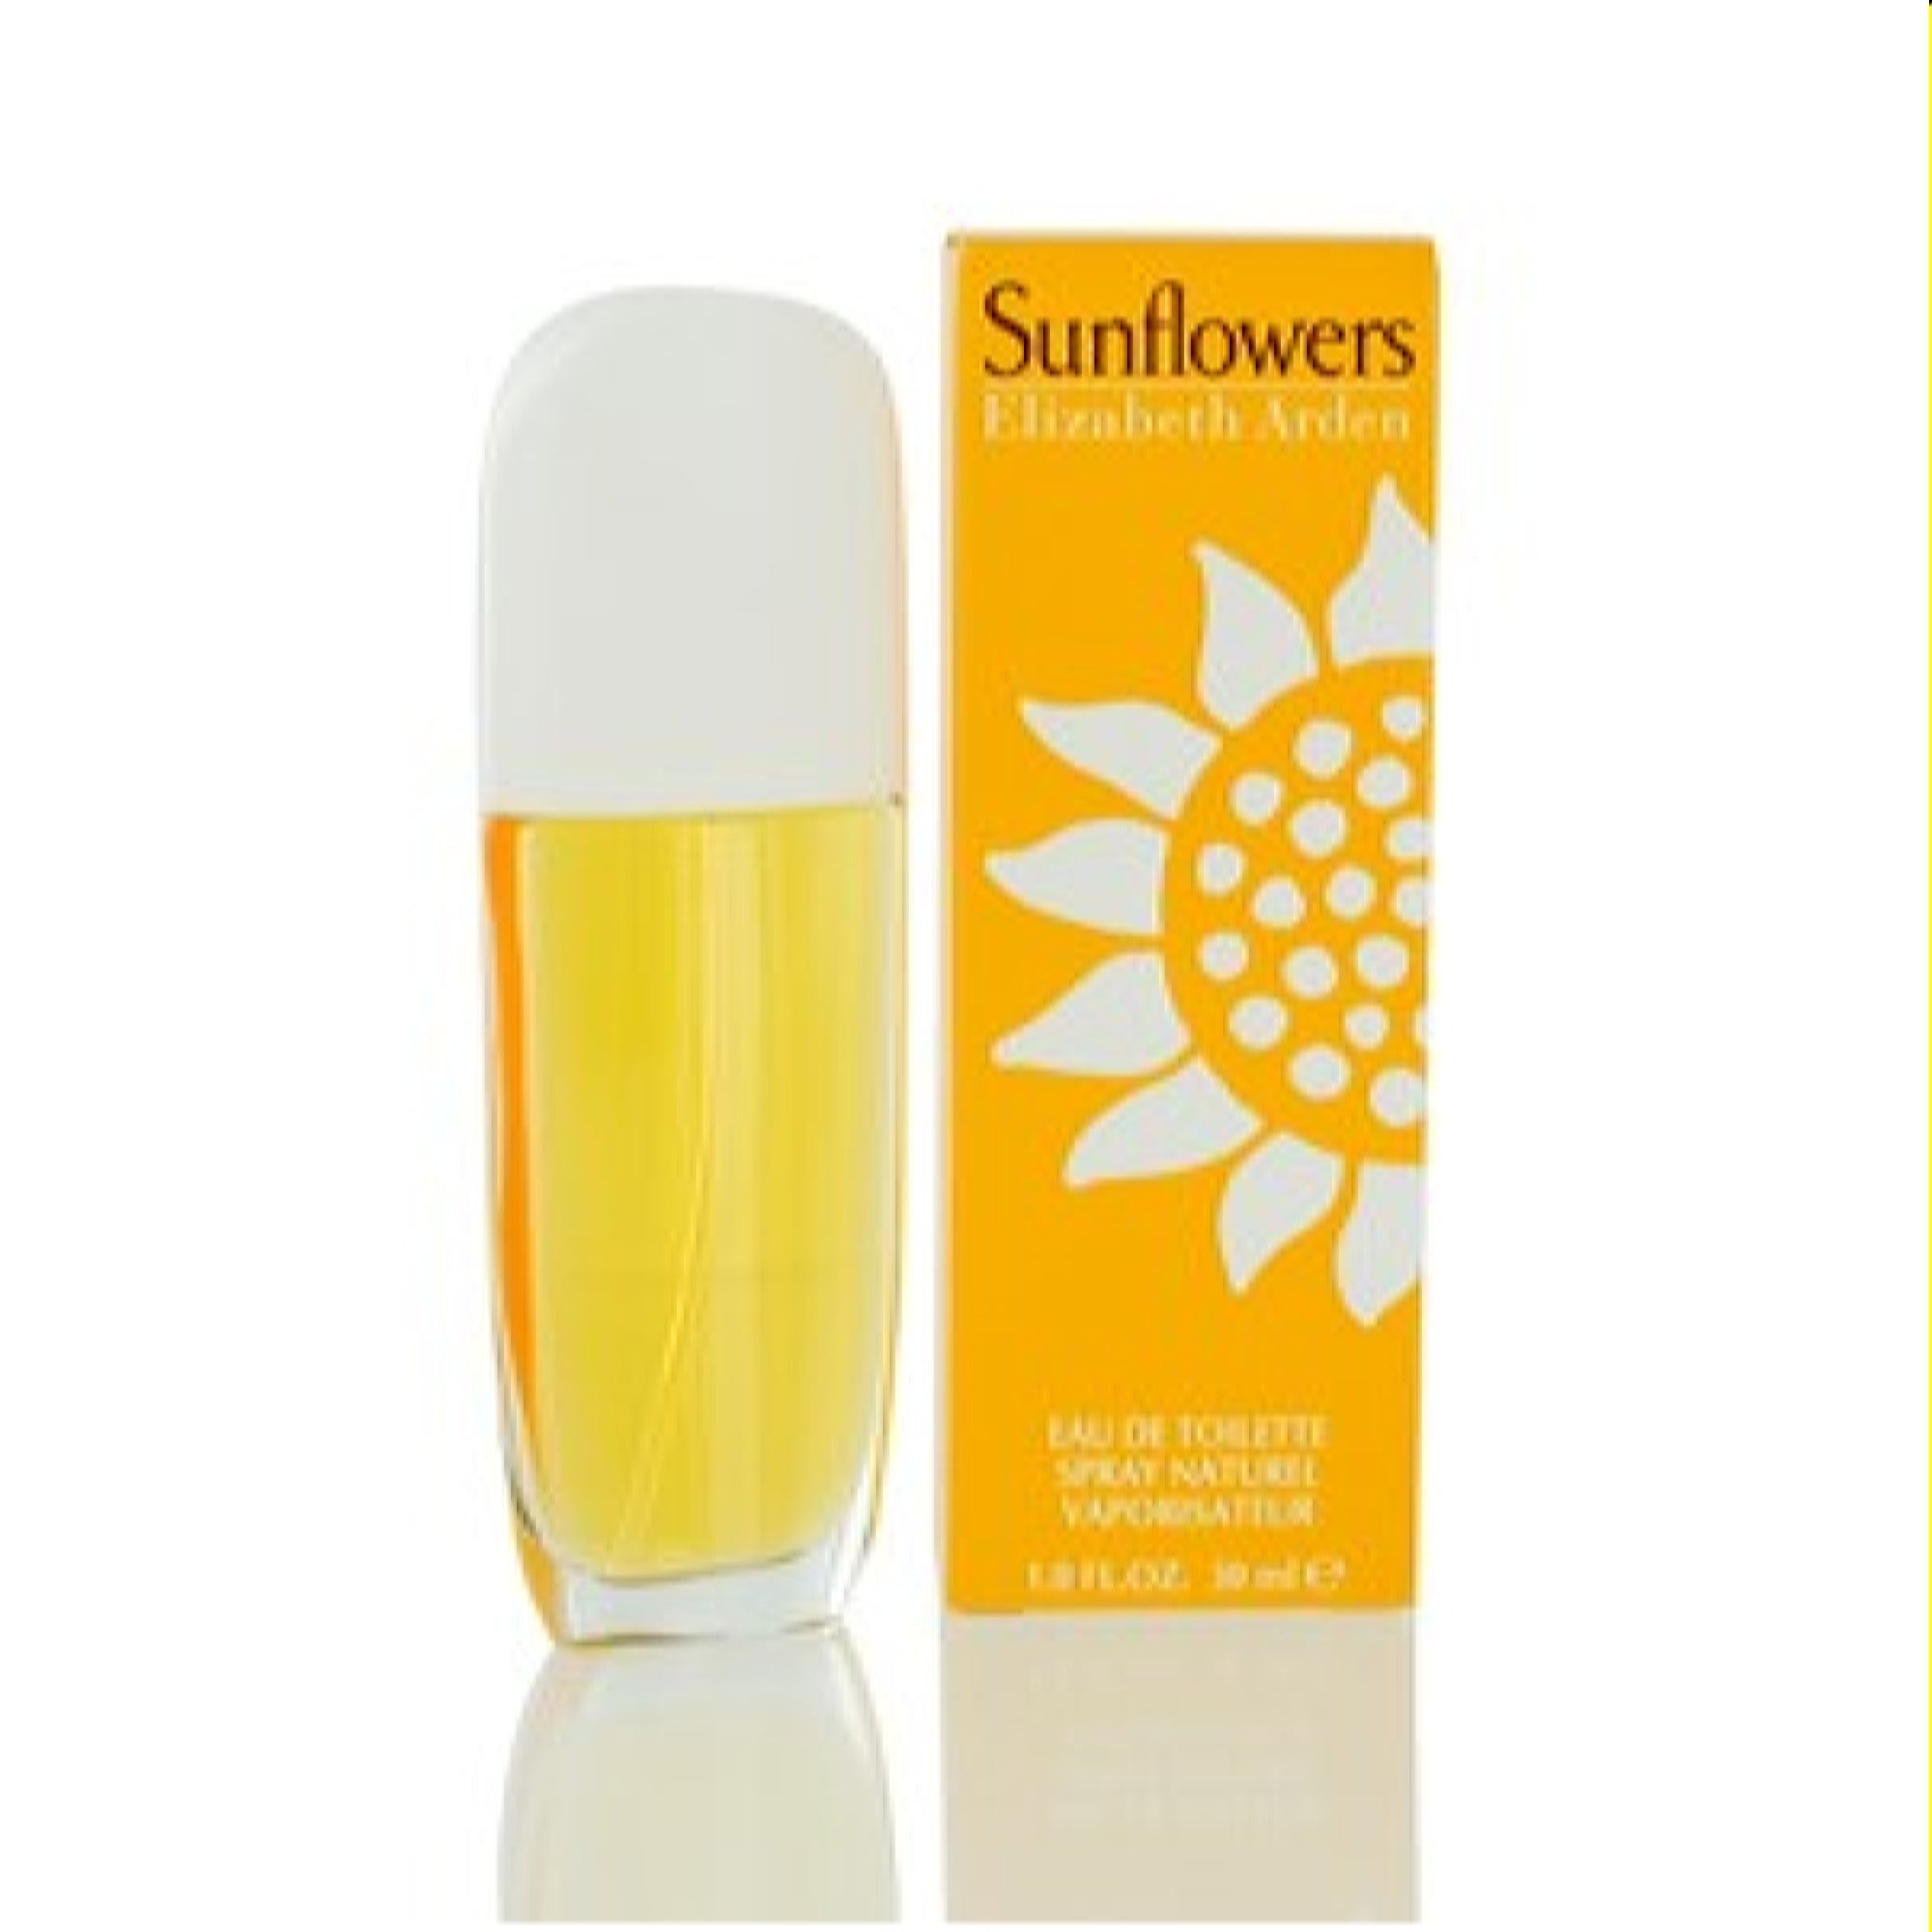 Sunflowers Elizabeth Arden Edt Spray 1.0 Oz (30 Ml) For Women 7587-400 -  Bezali